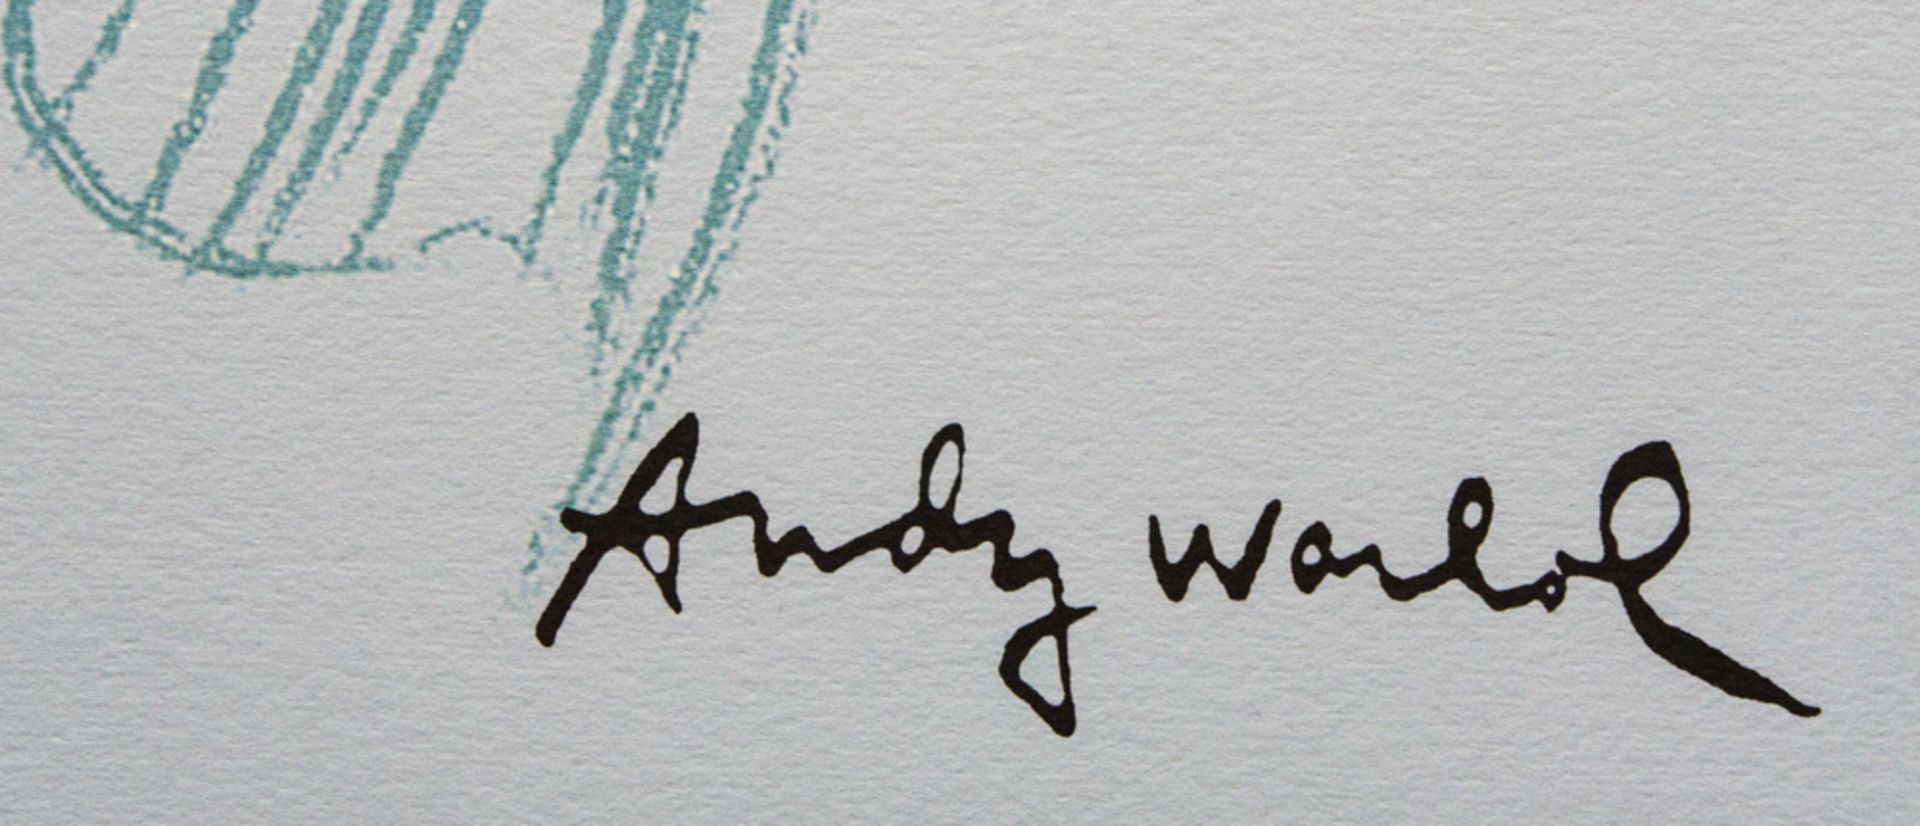 Andy Warhol 'Superman' - Image 2 of 4